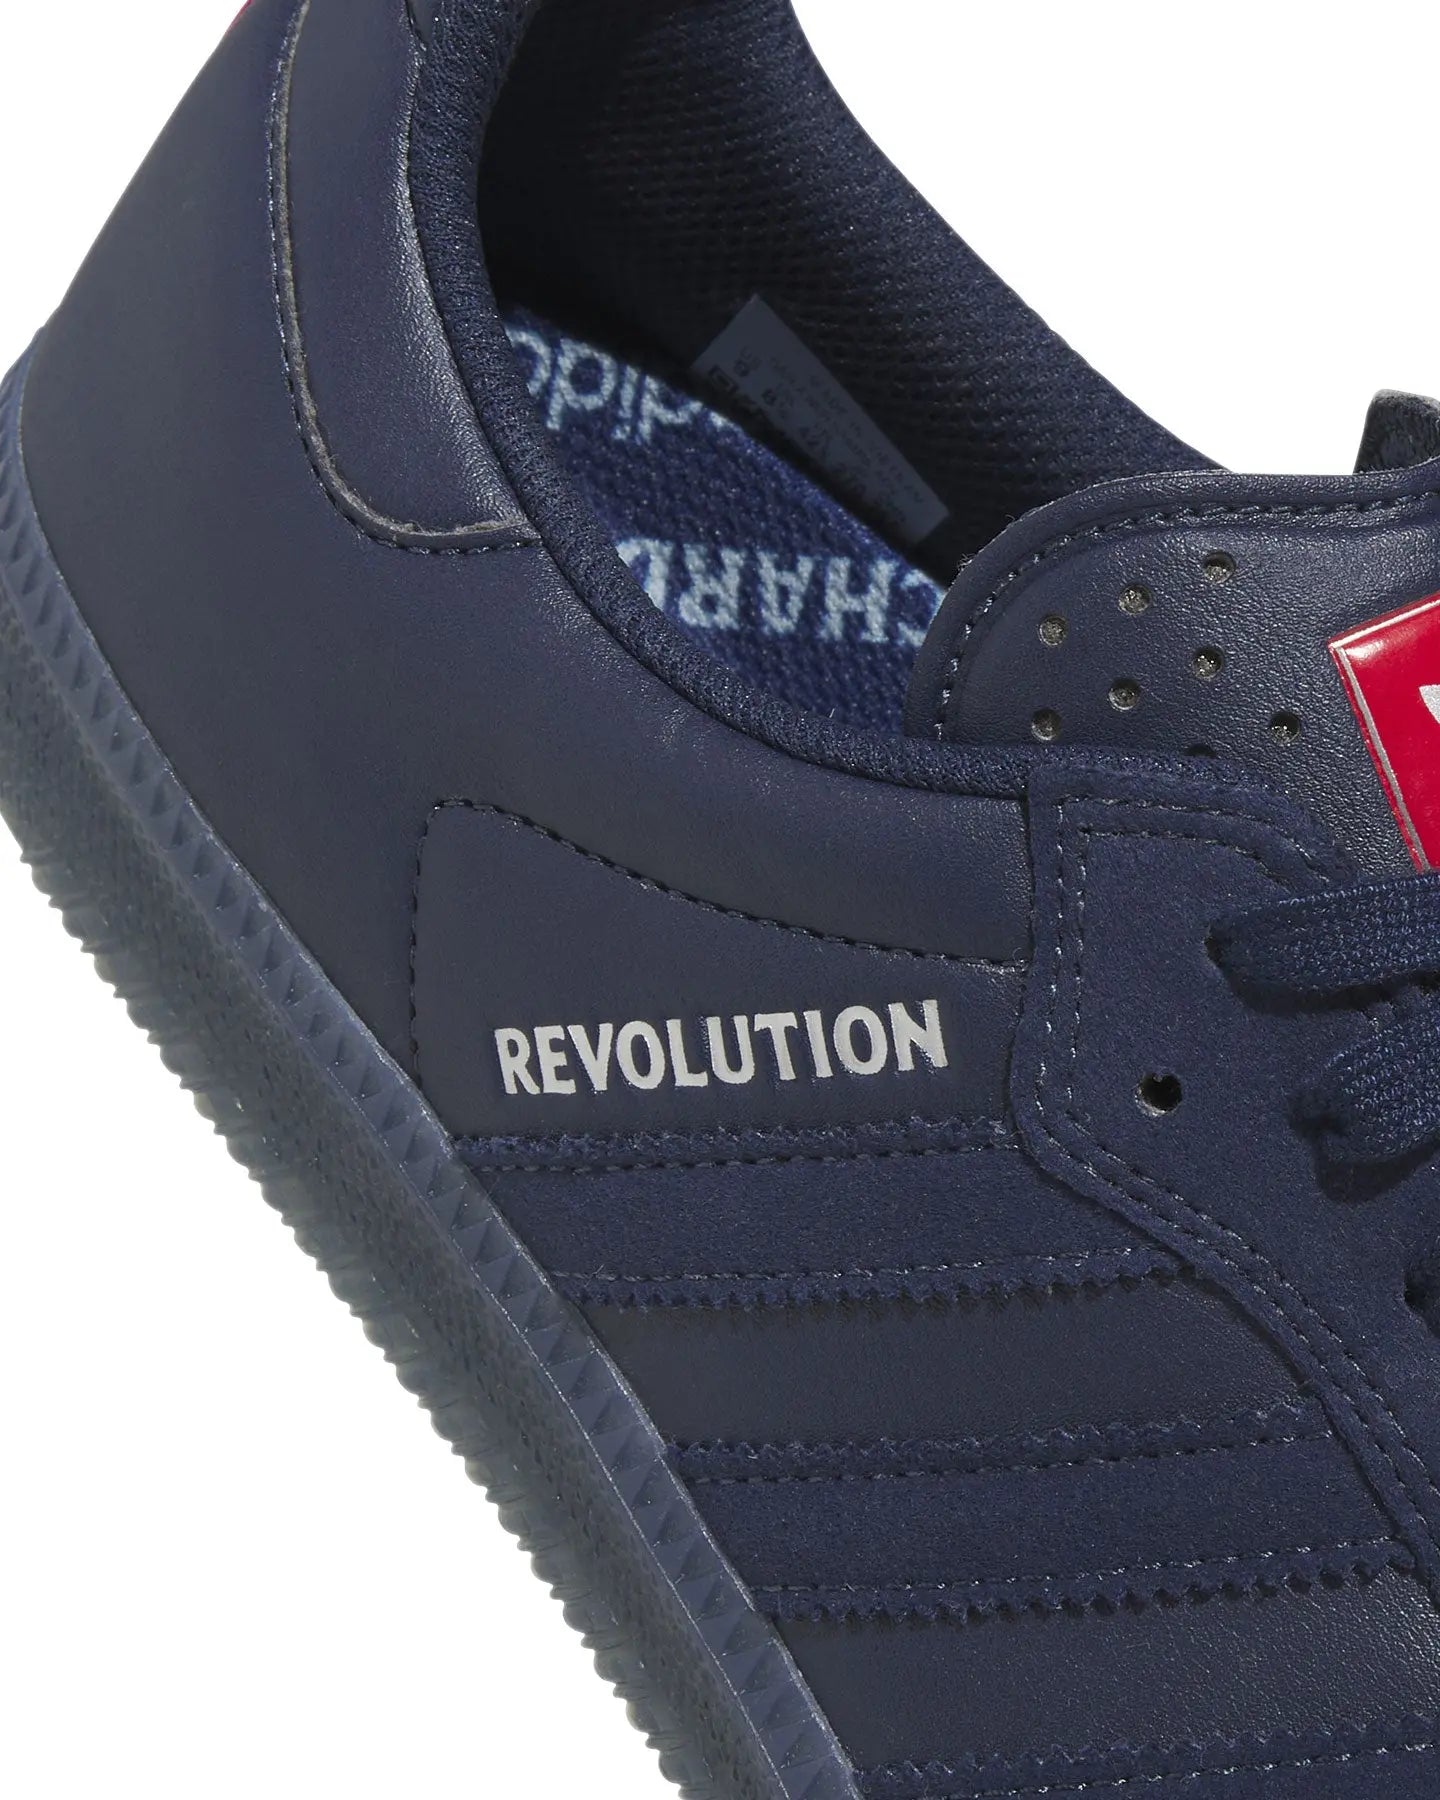 Adidas x Orchard x New England Revolution Samba ADV Footwear